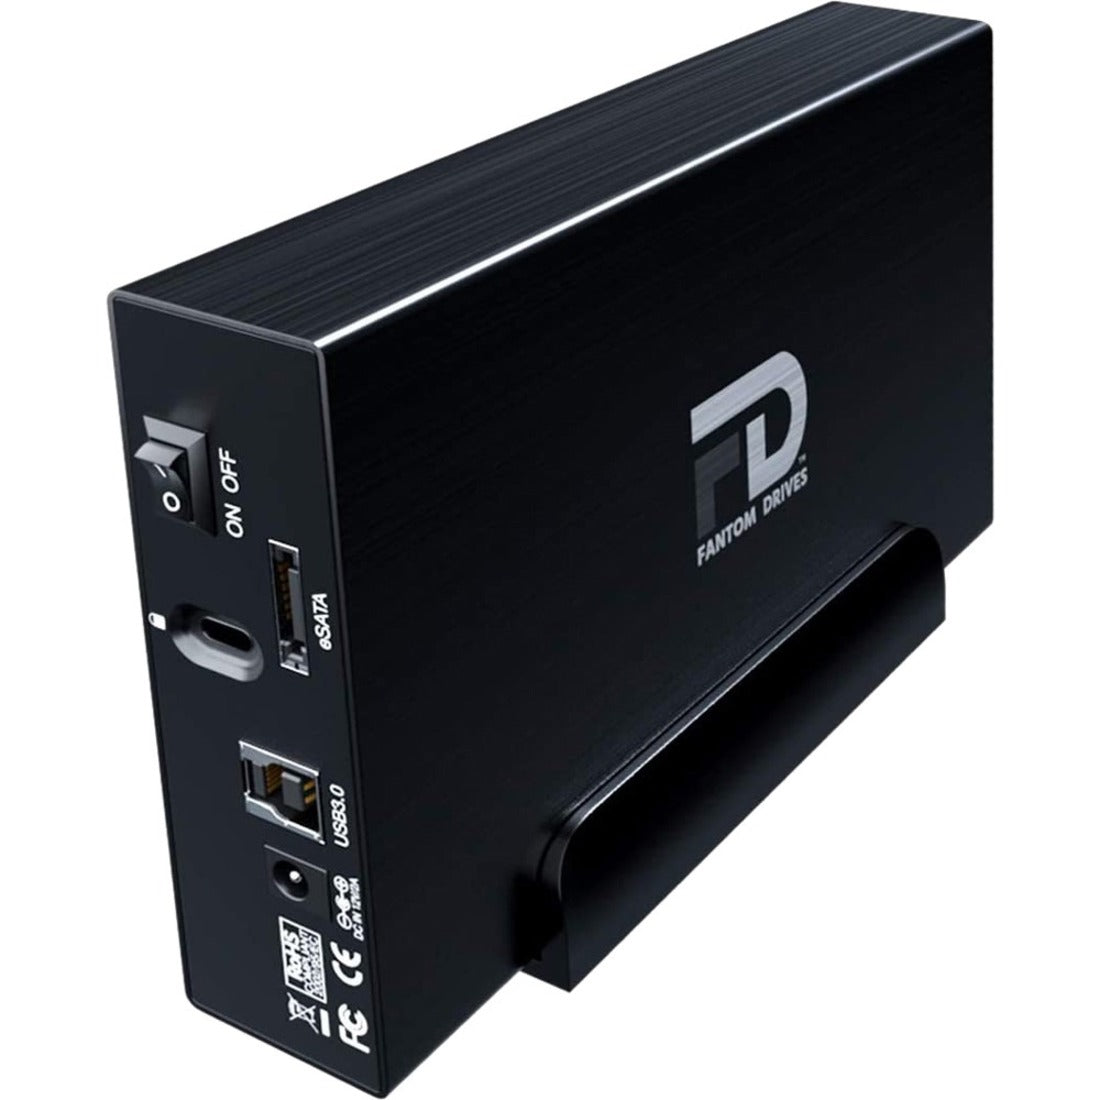 Fantom Drives GF3B4000EU GFORCE 4TB External Hard Drive - USB 3.2 Gen 1 5Gb/s & eSATA - Black, High-Speed Storage Solution for Gaming Consoles